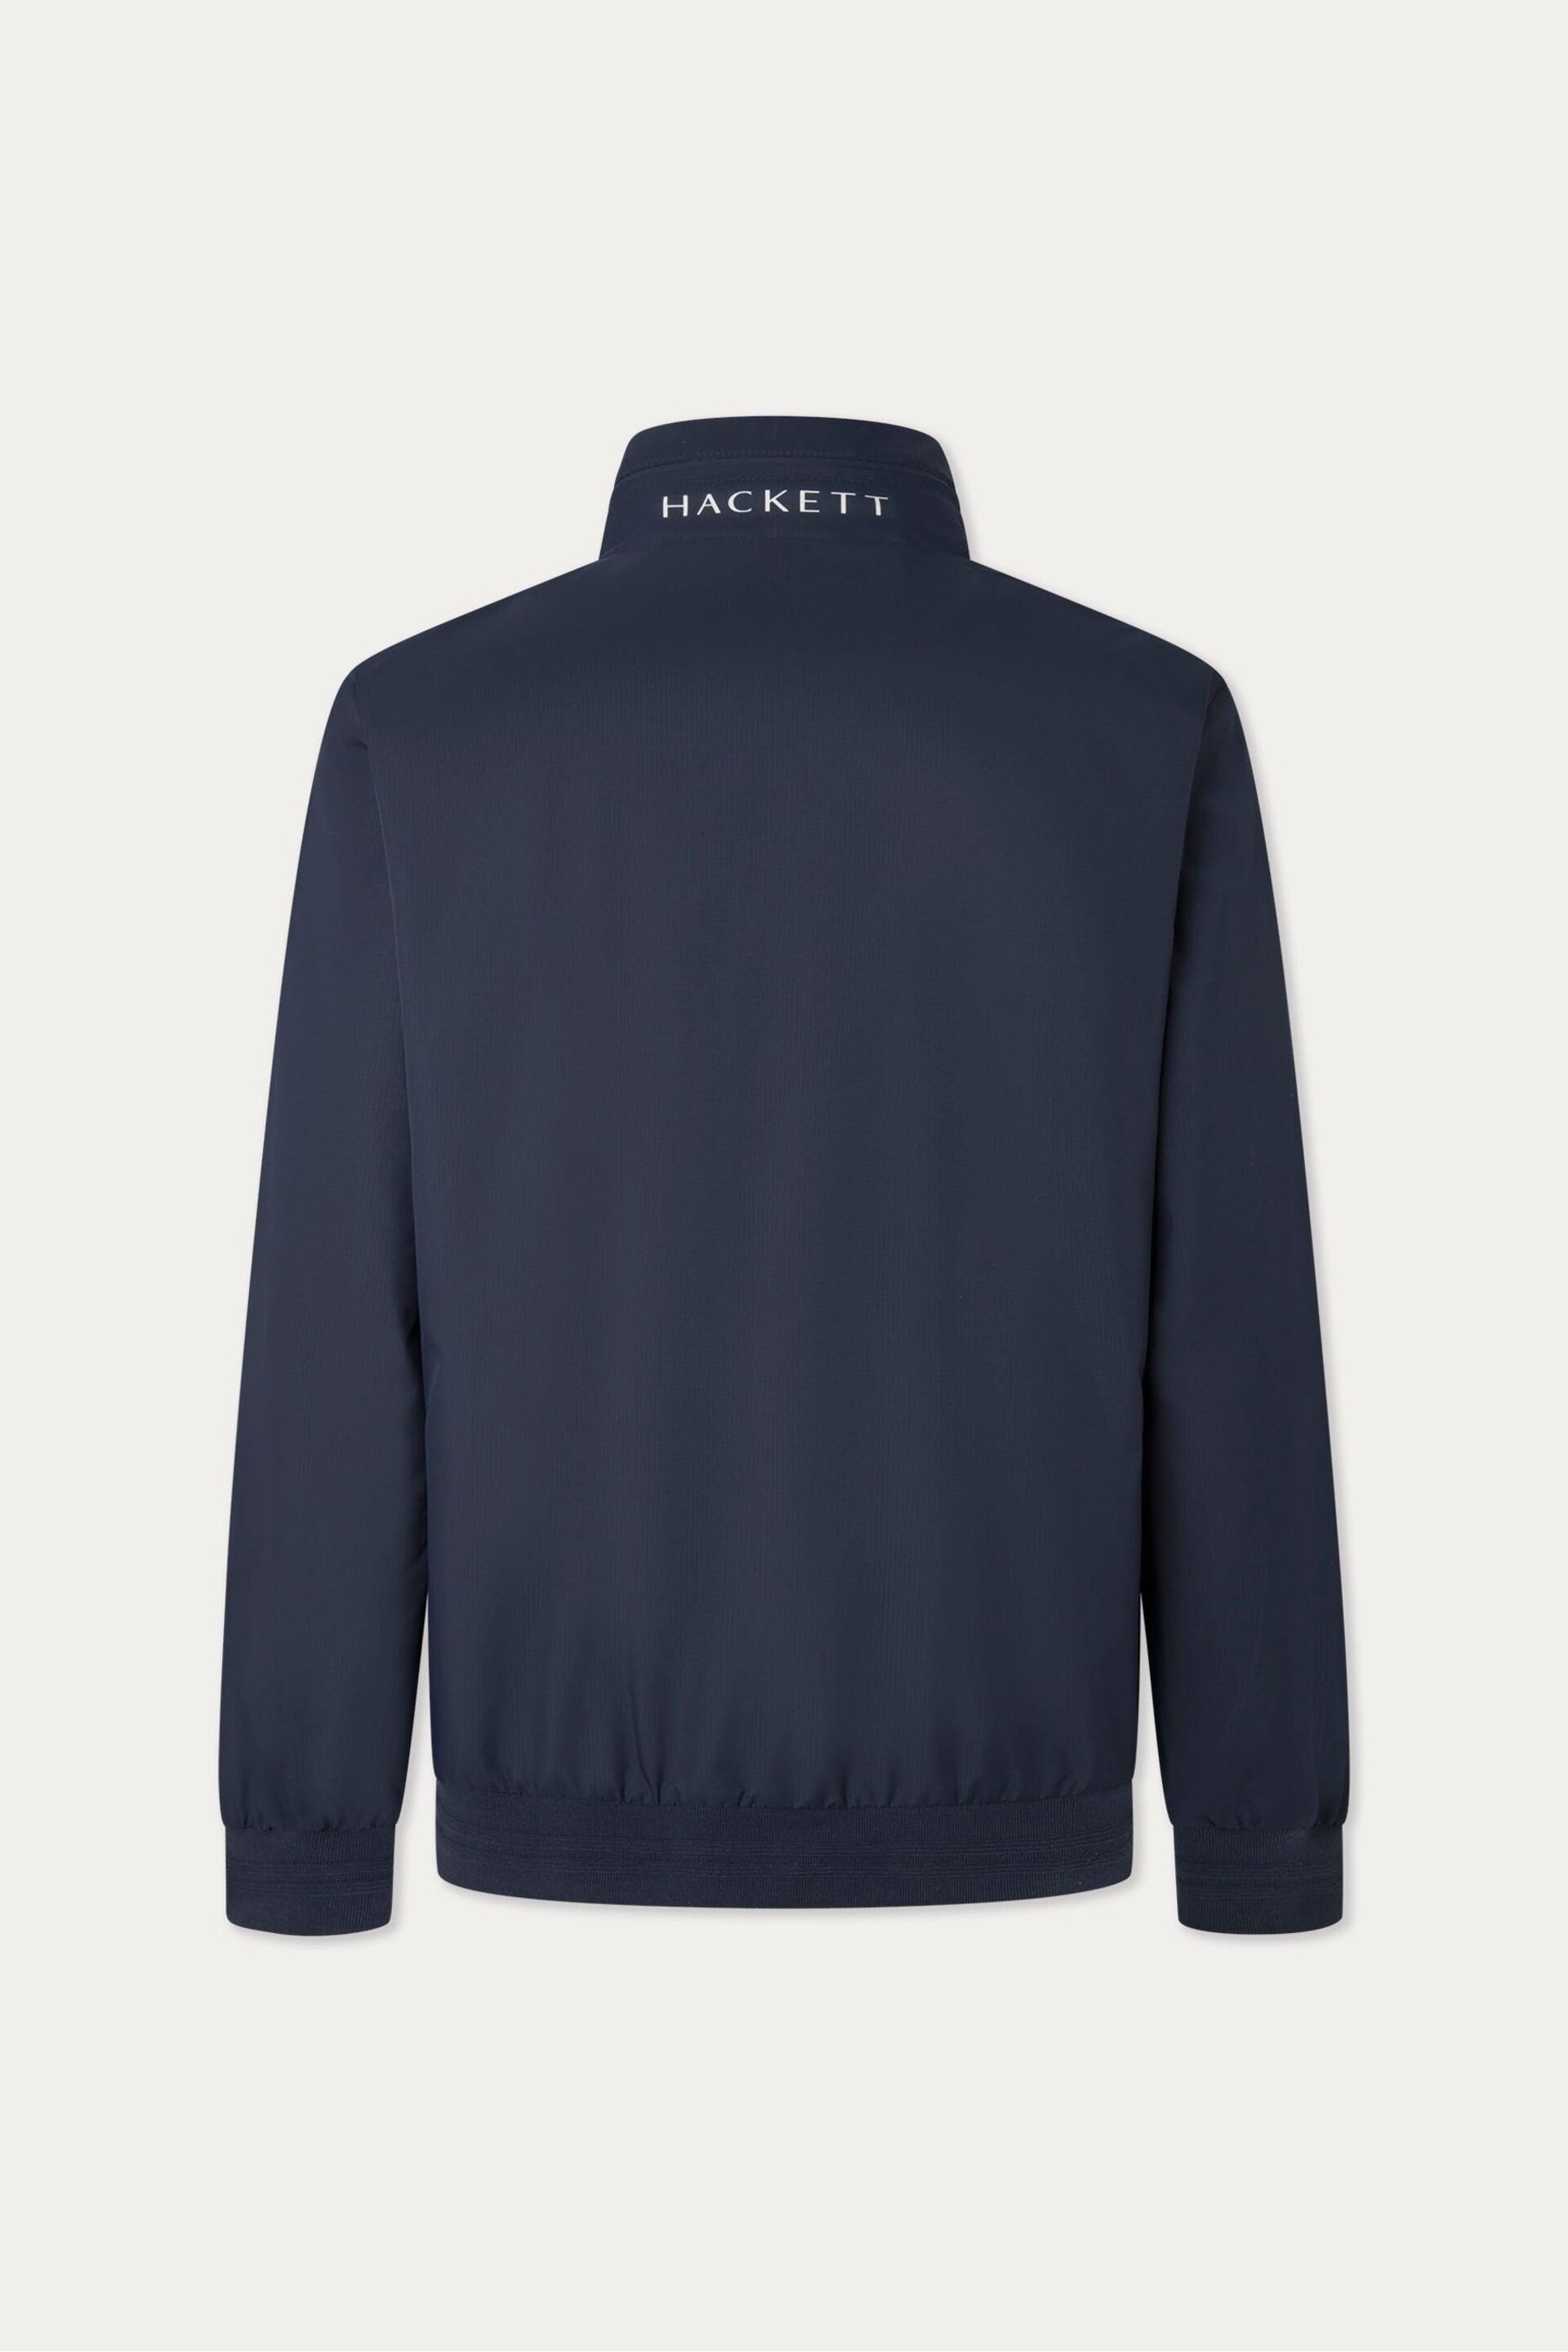 Hackett London Mens Blue Outerwear Coat - Image 2 of 9